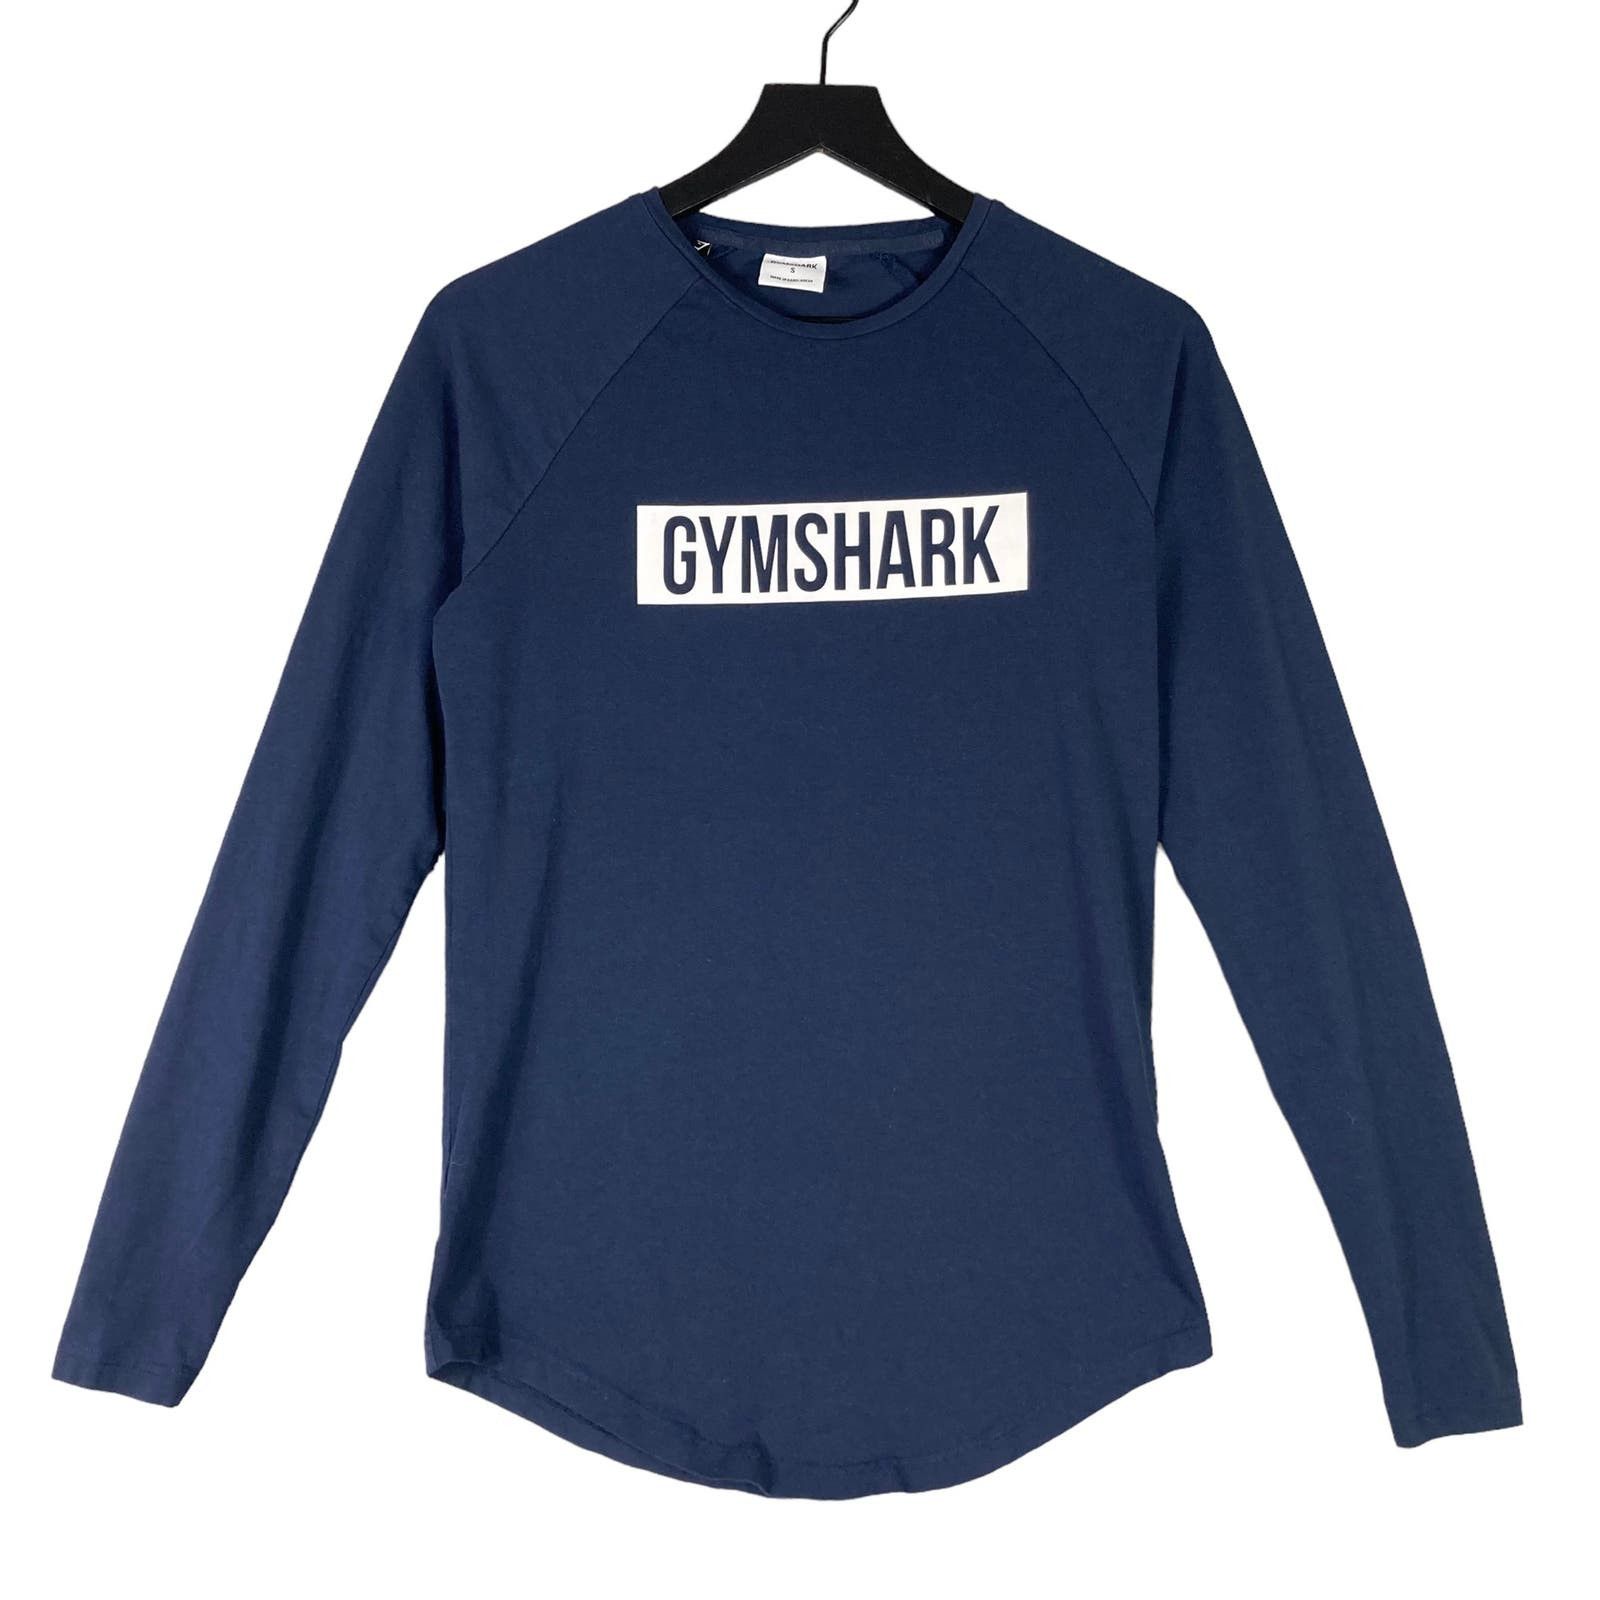 Gymshark, Shirts, Rare Gymshark Onyx Blue Zip Up